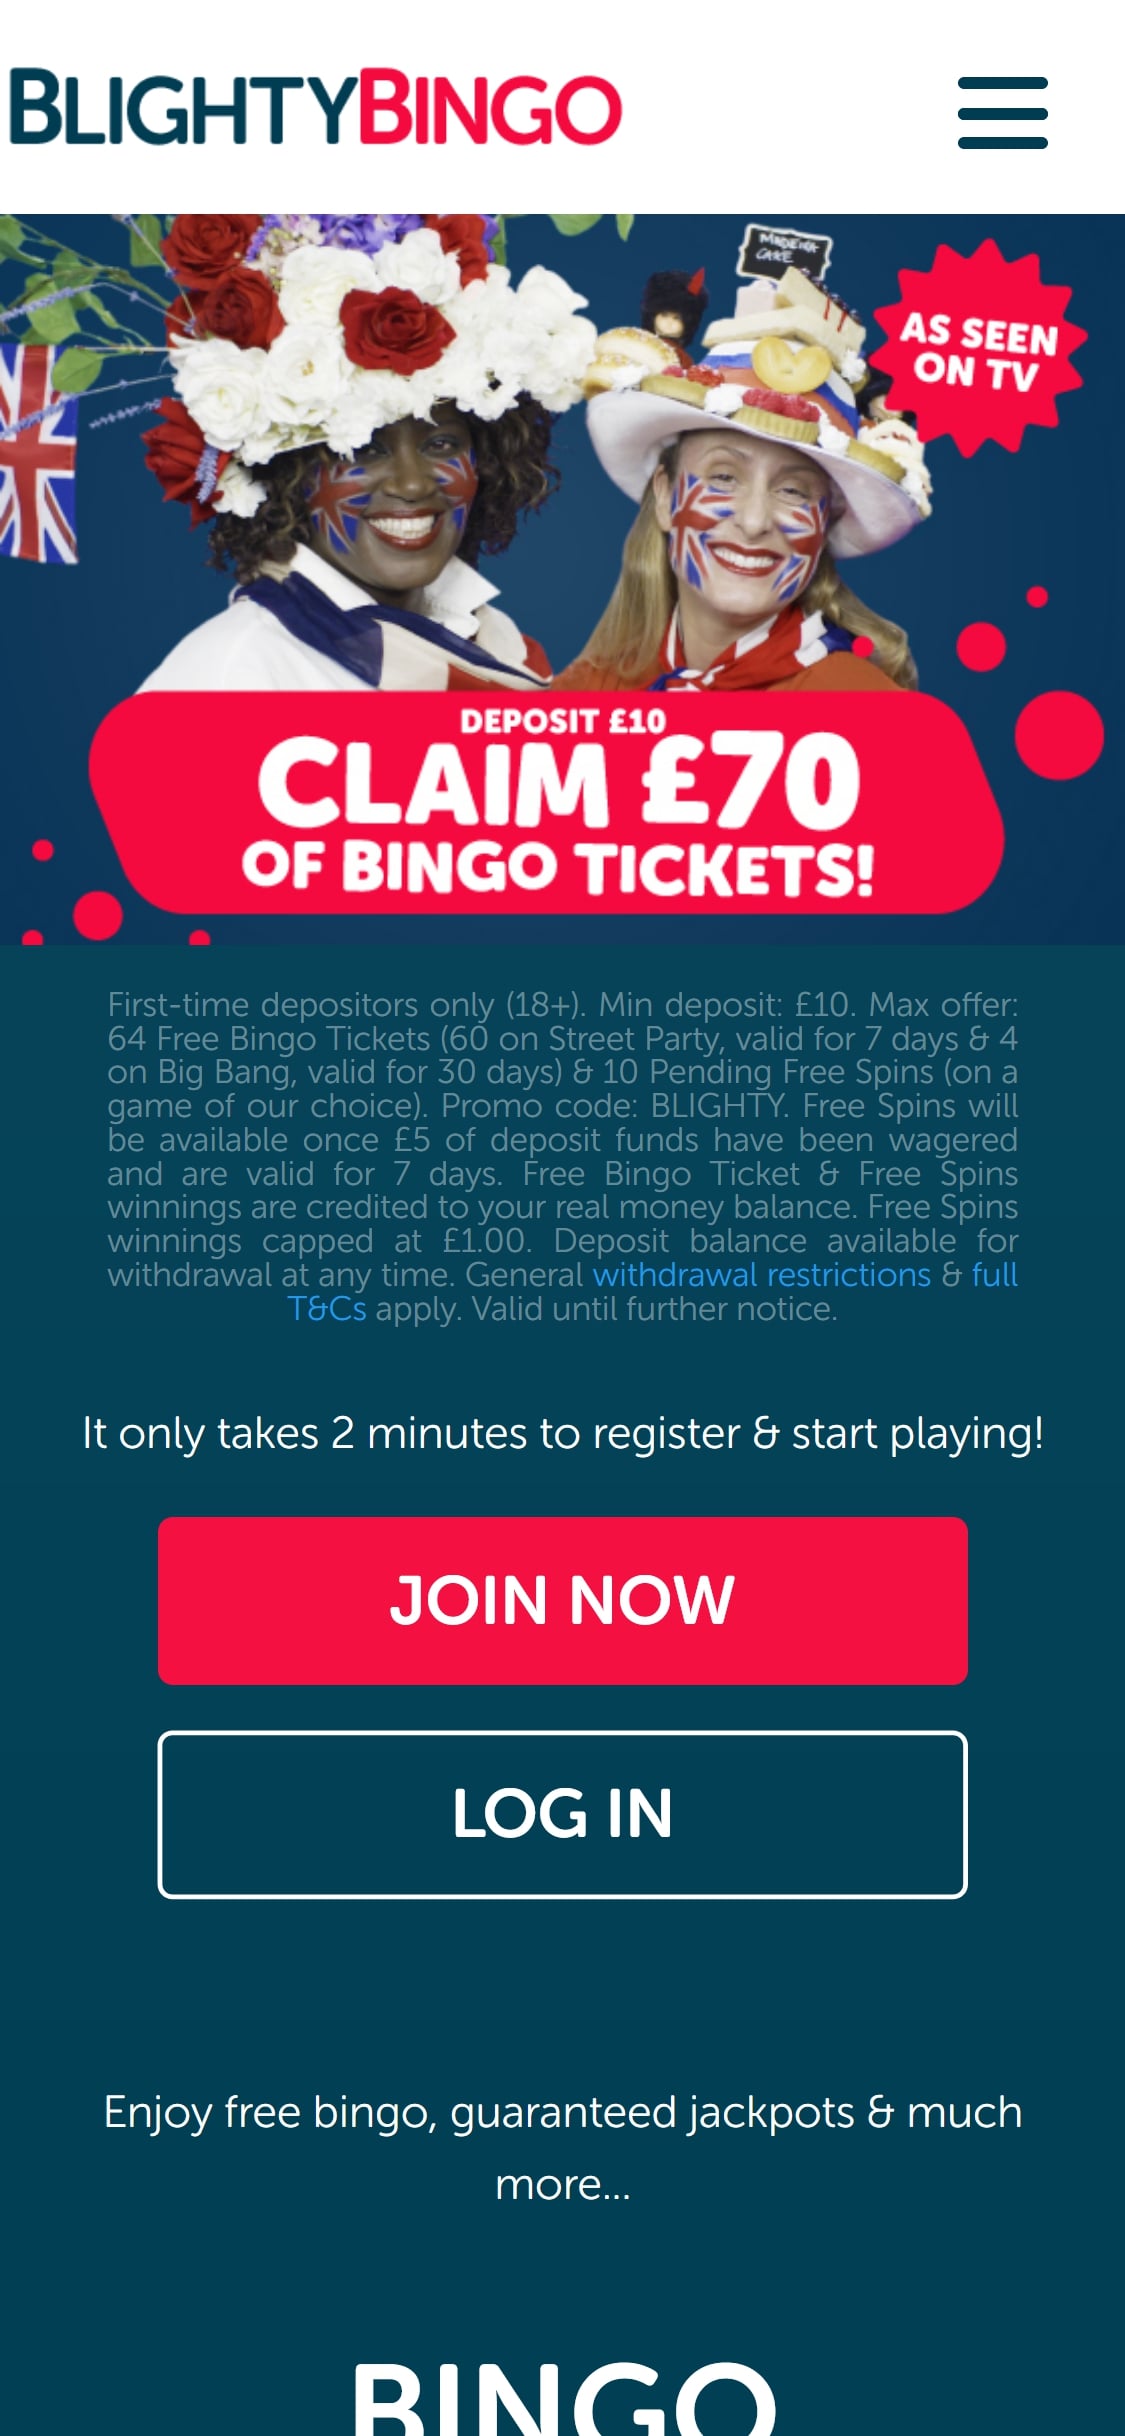 Blighty Bingo Casino Mobile Review